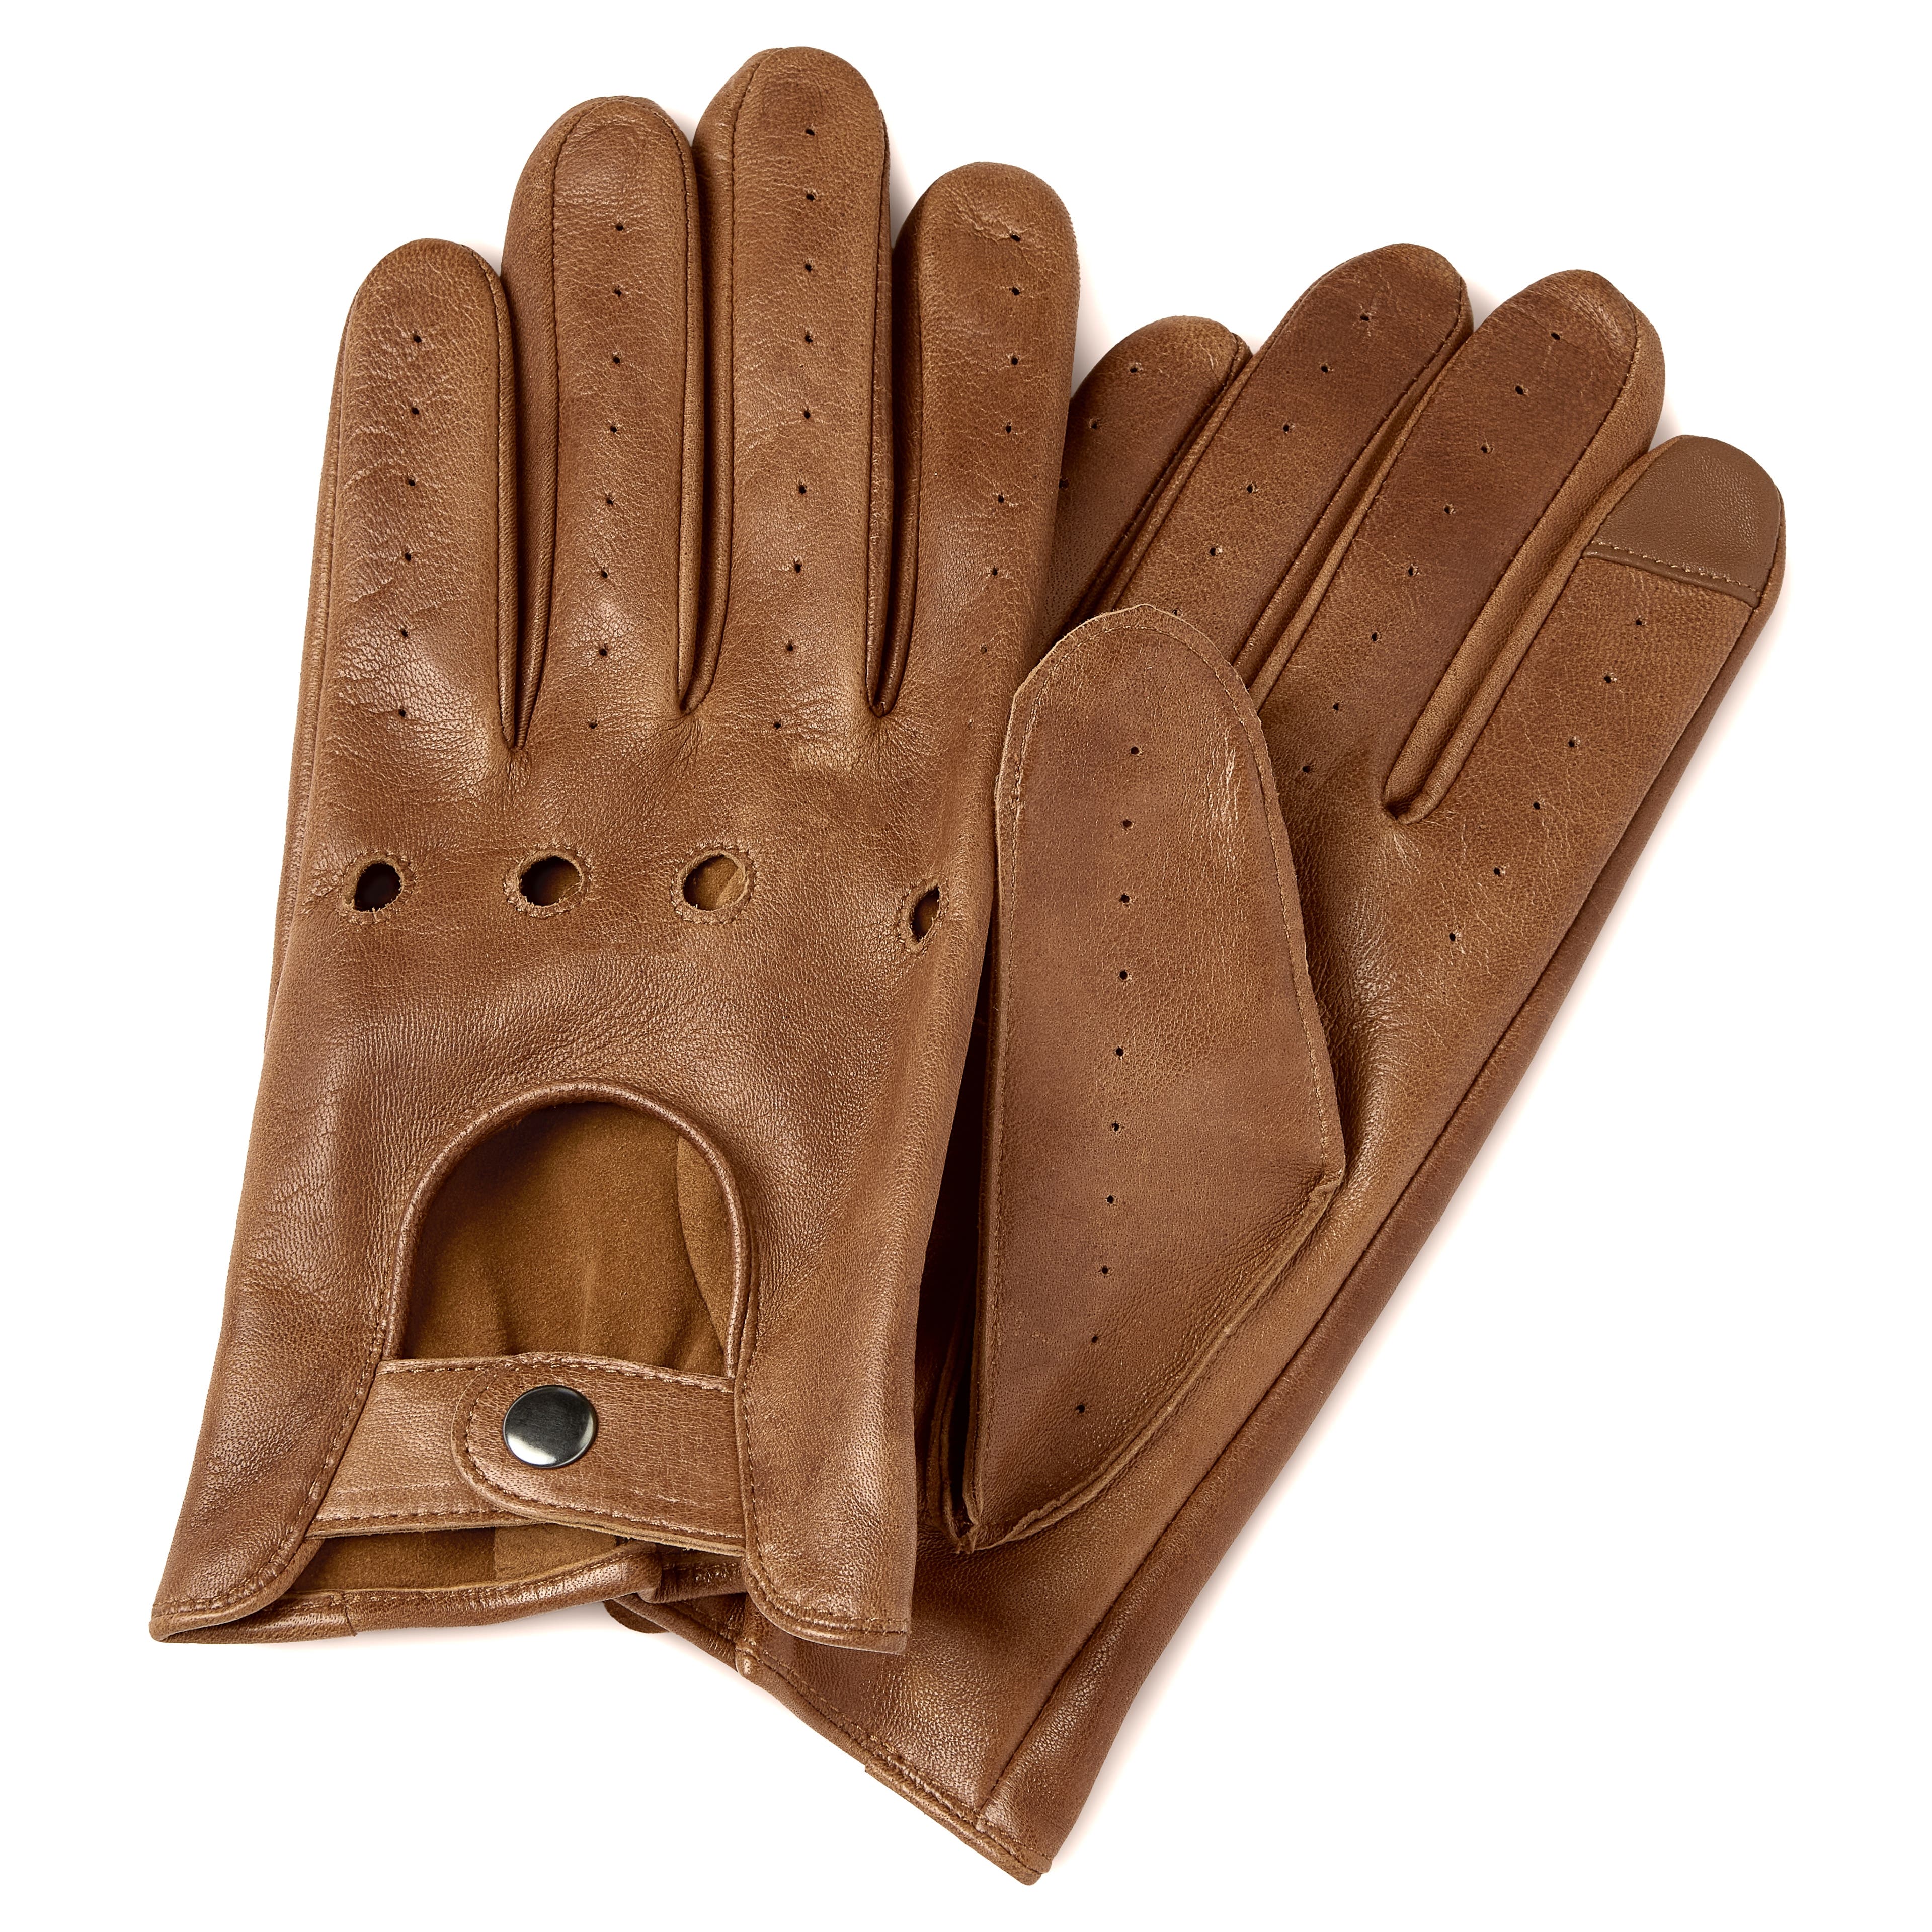 Light Brown Sheepskin Leather Touchscreen Driving Gloves